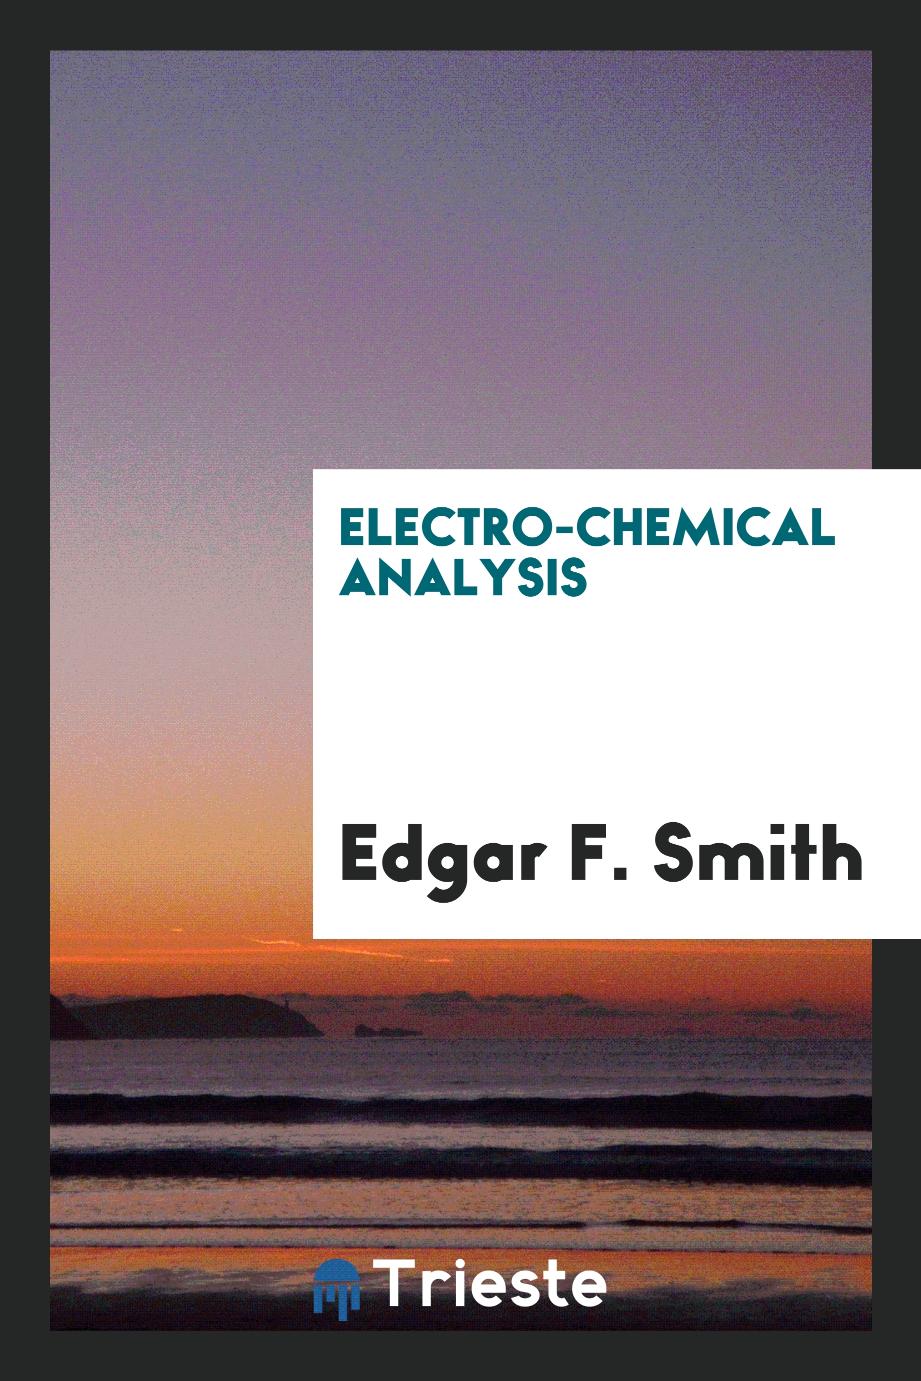 Electro-chemical analysis